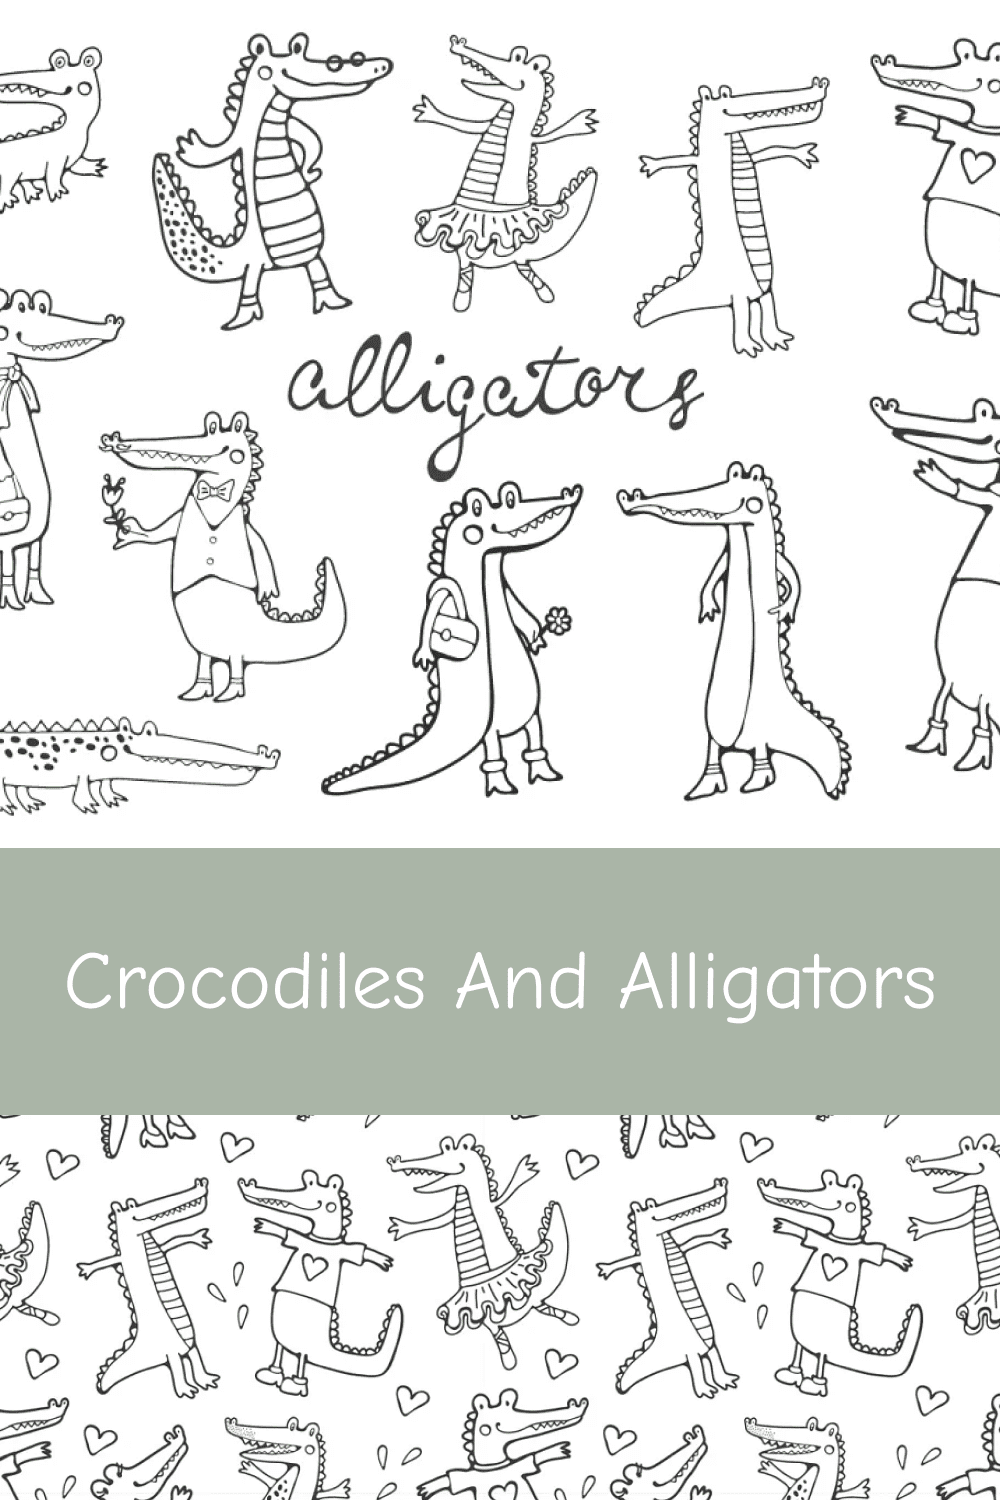 04 crocodiles and alligators 1000h1500